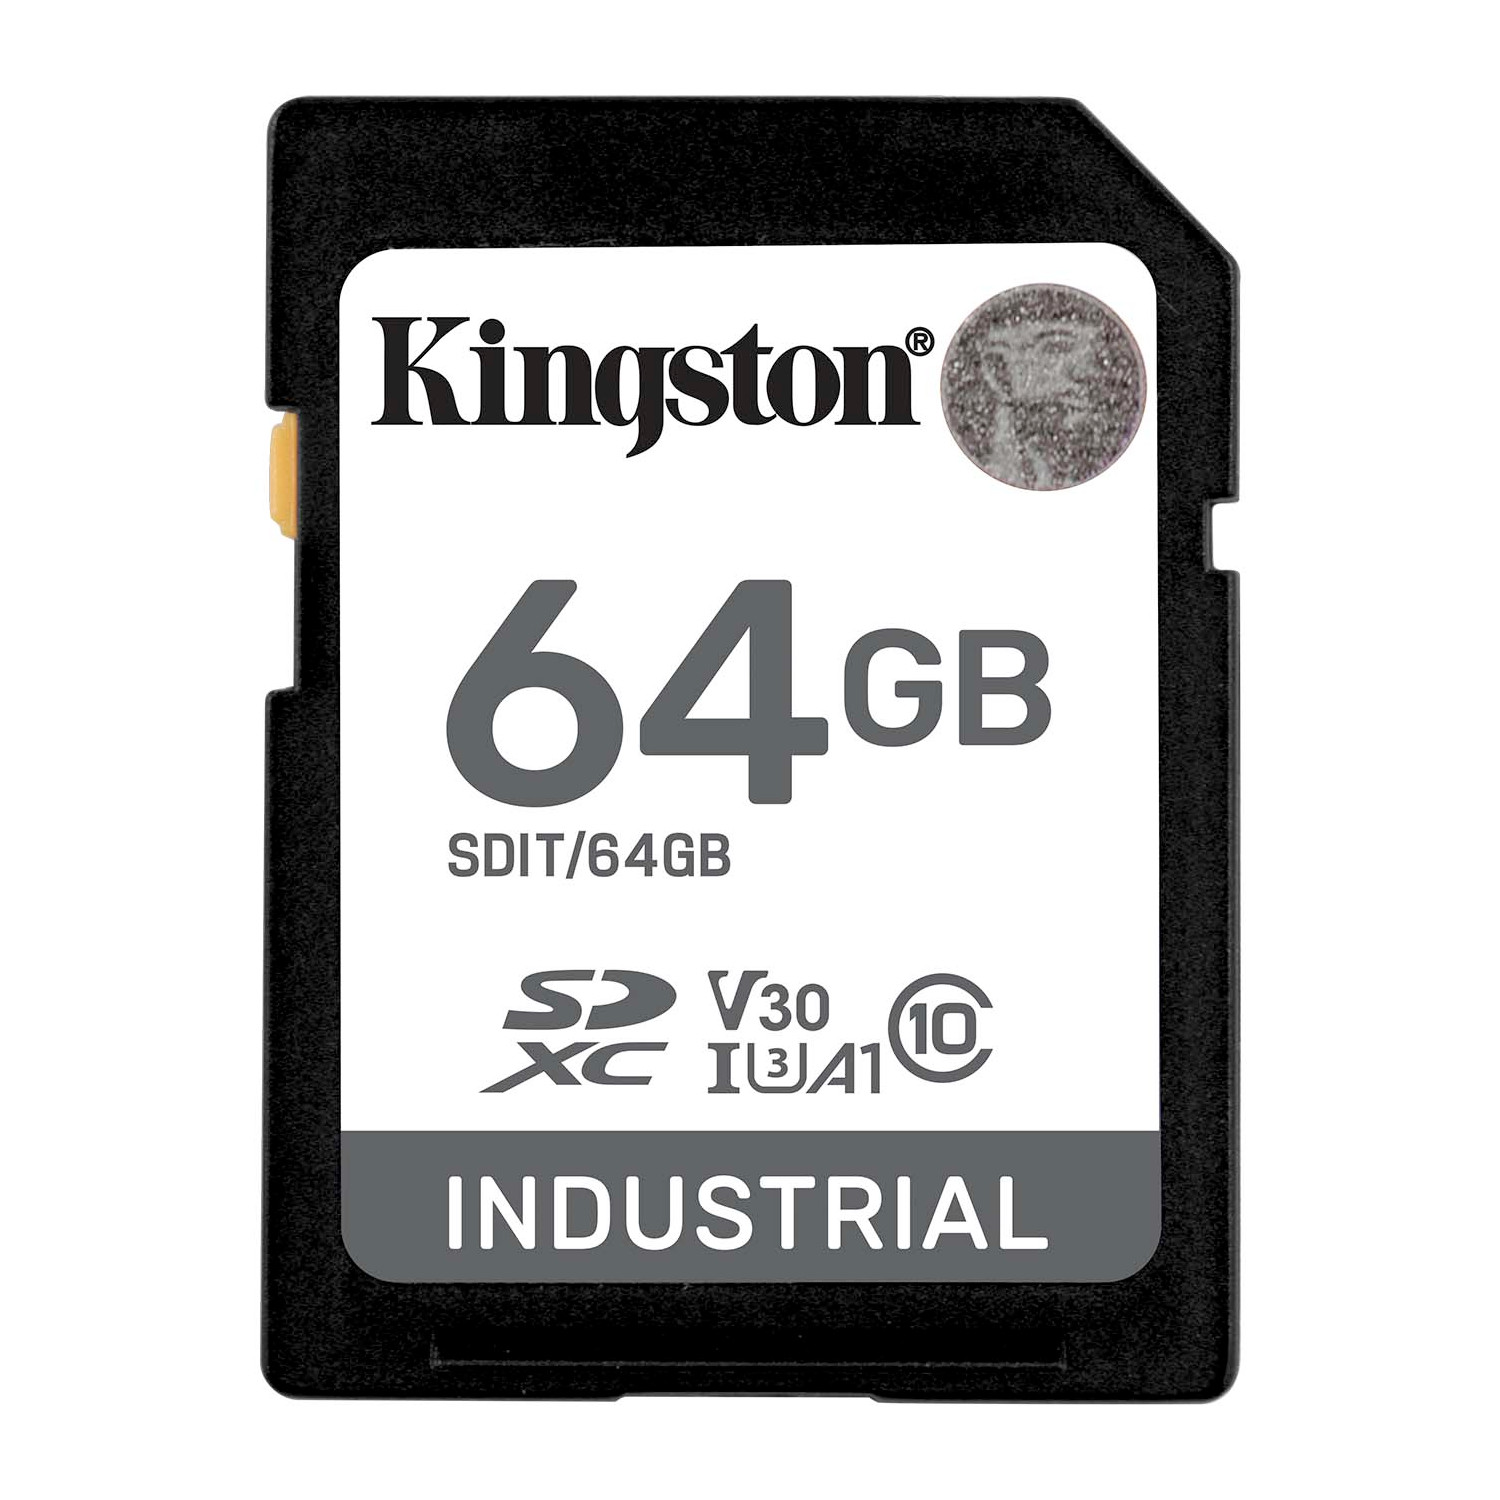 Kingston - SDIT-64GB -   